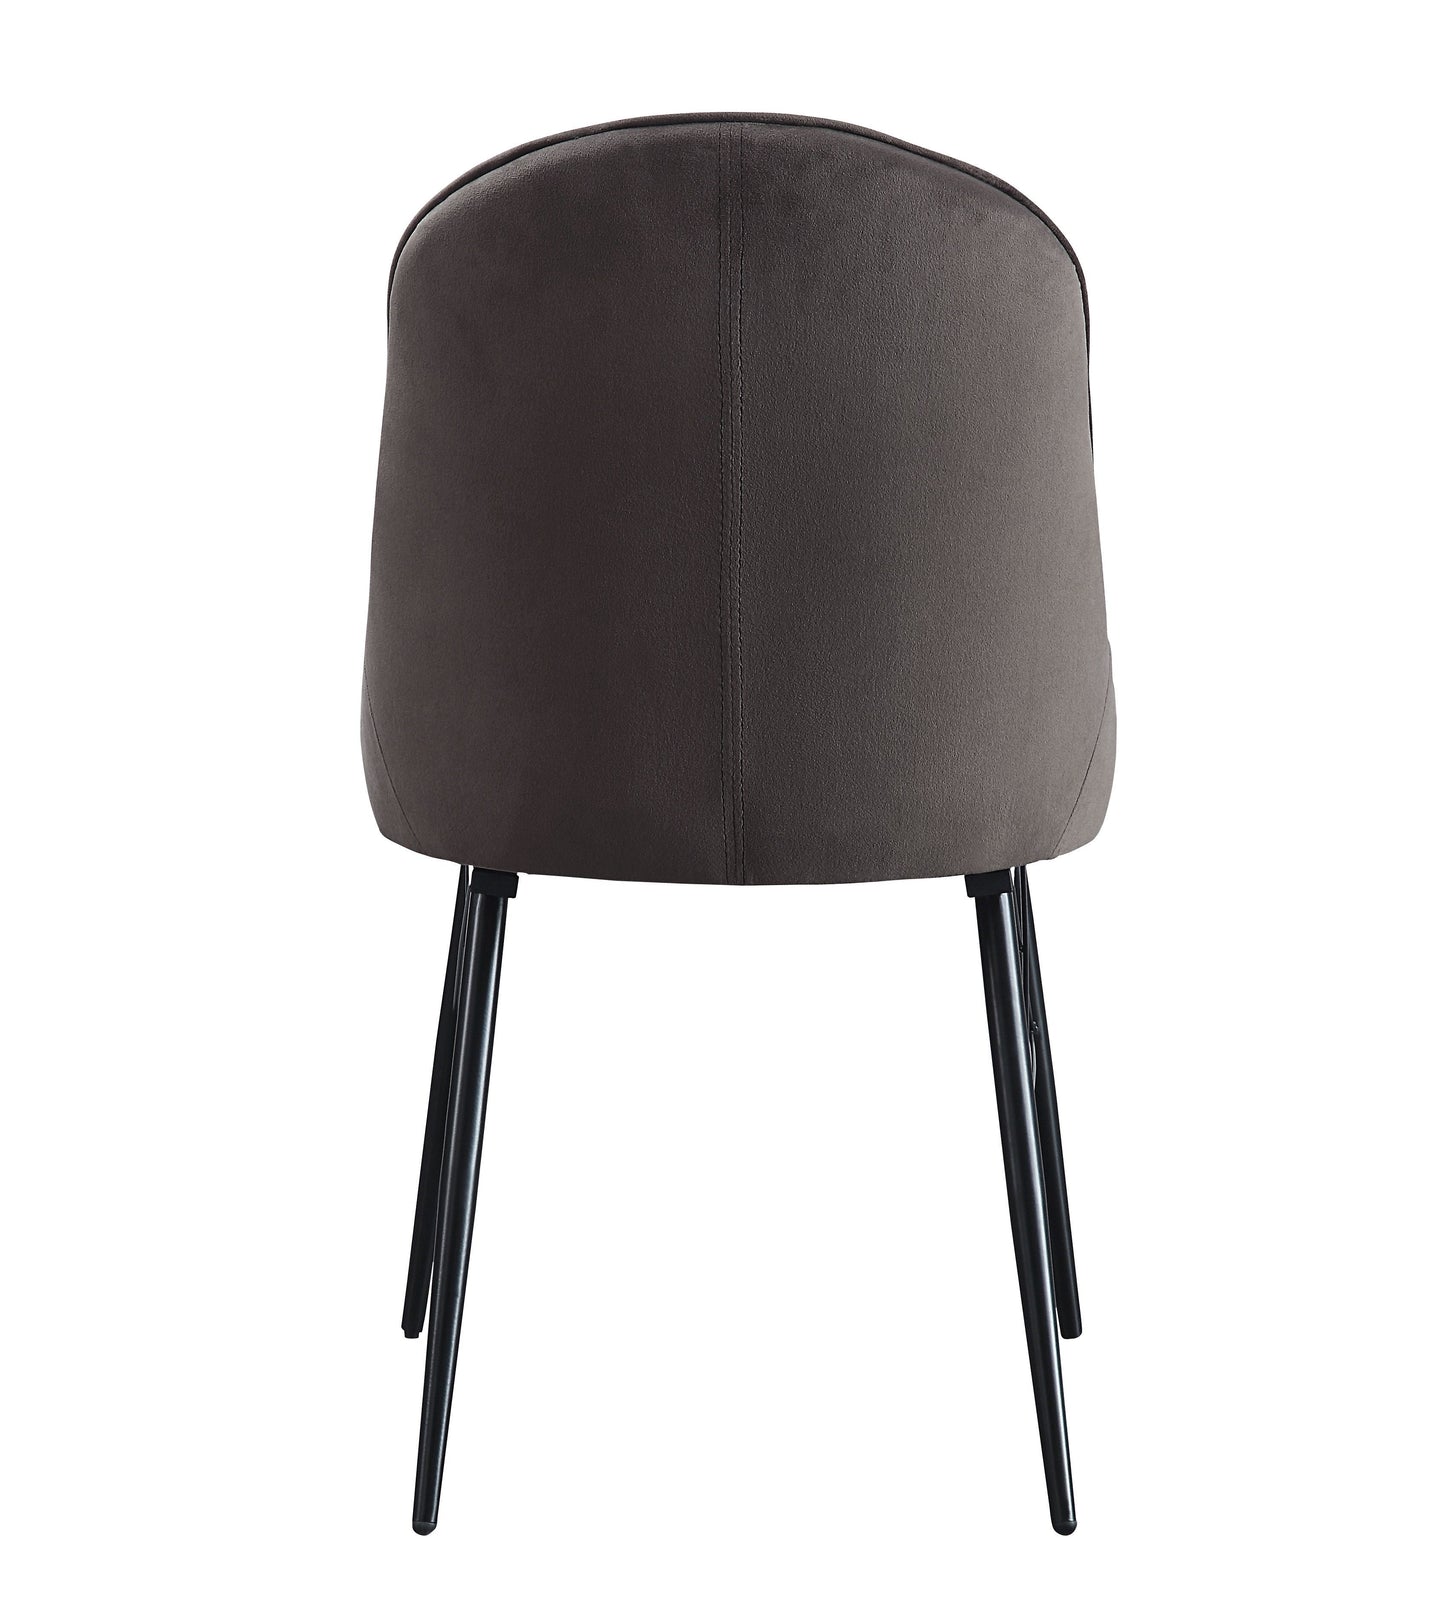 ACME Abraham Side Chair, Gray Fabric & Black Finish 74016